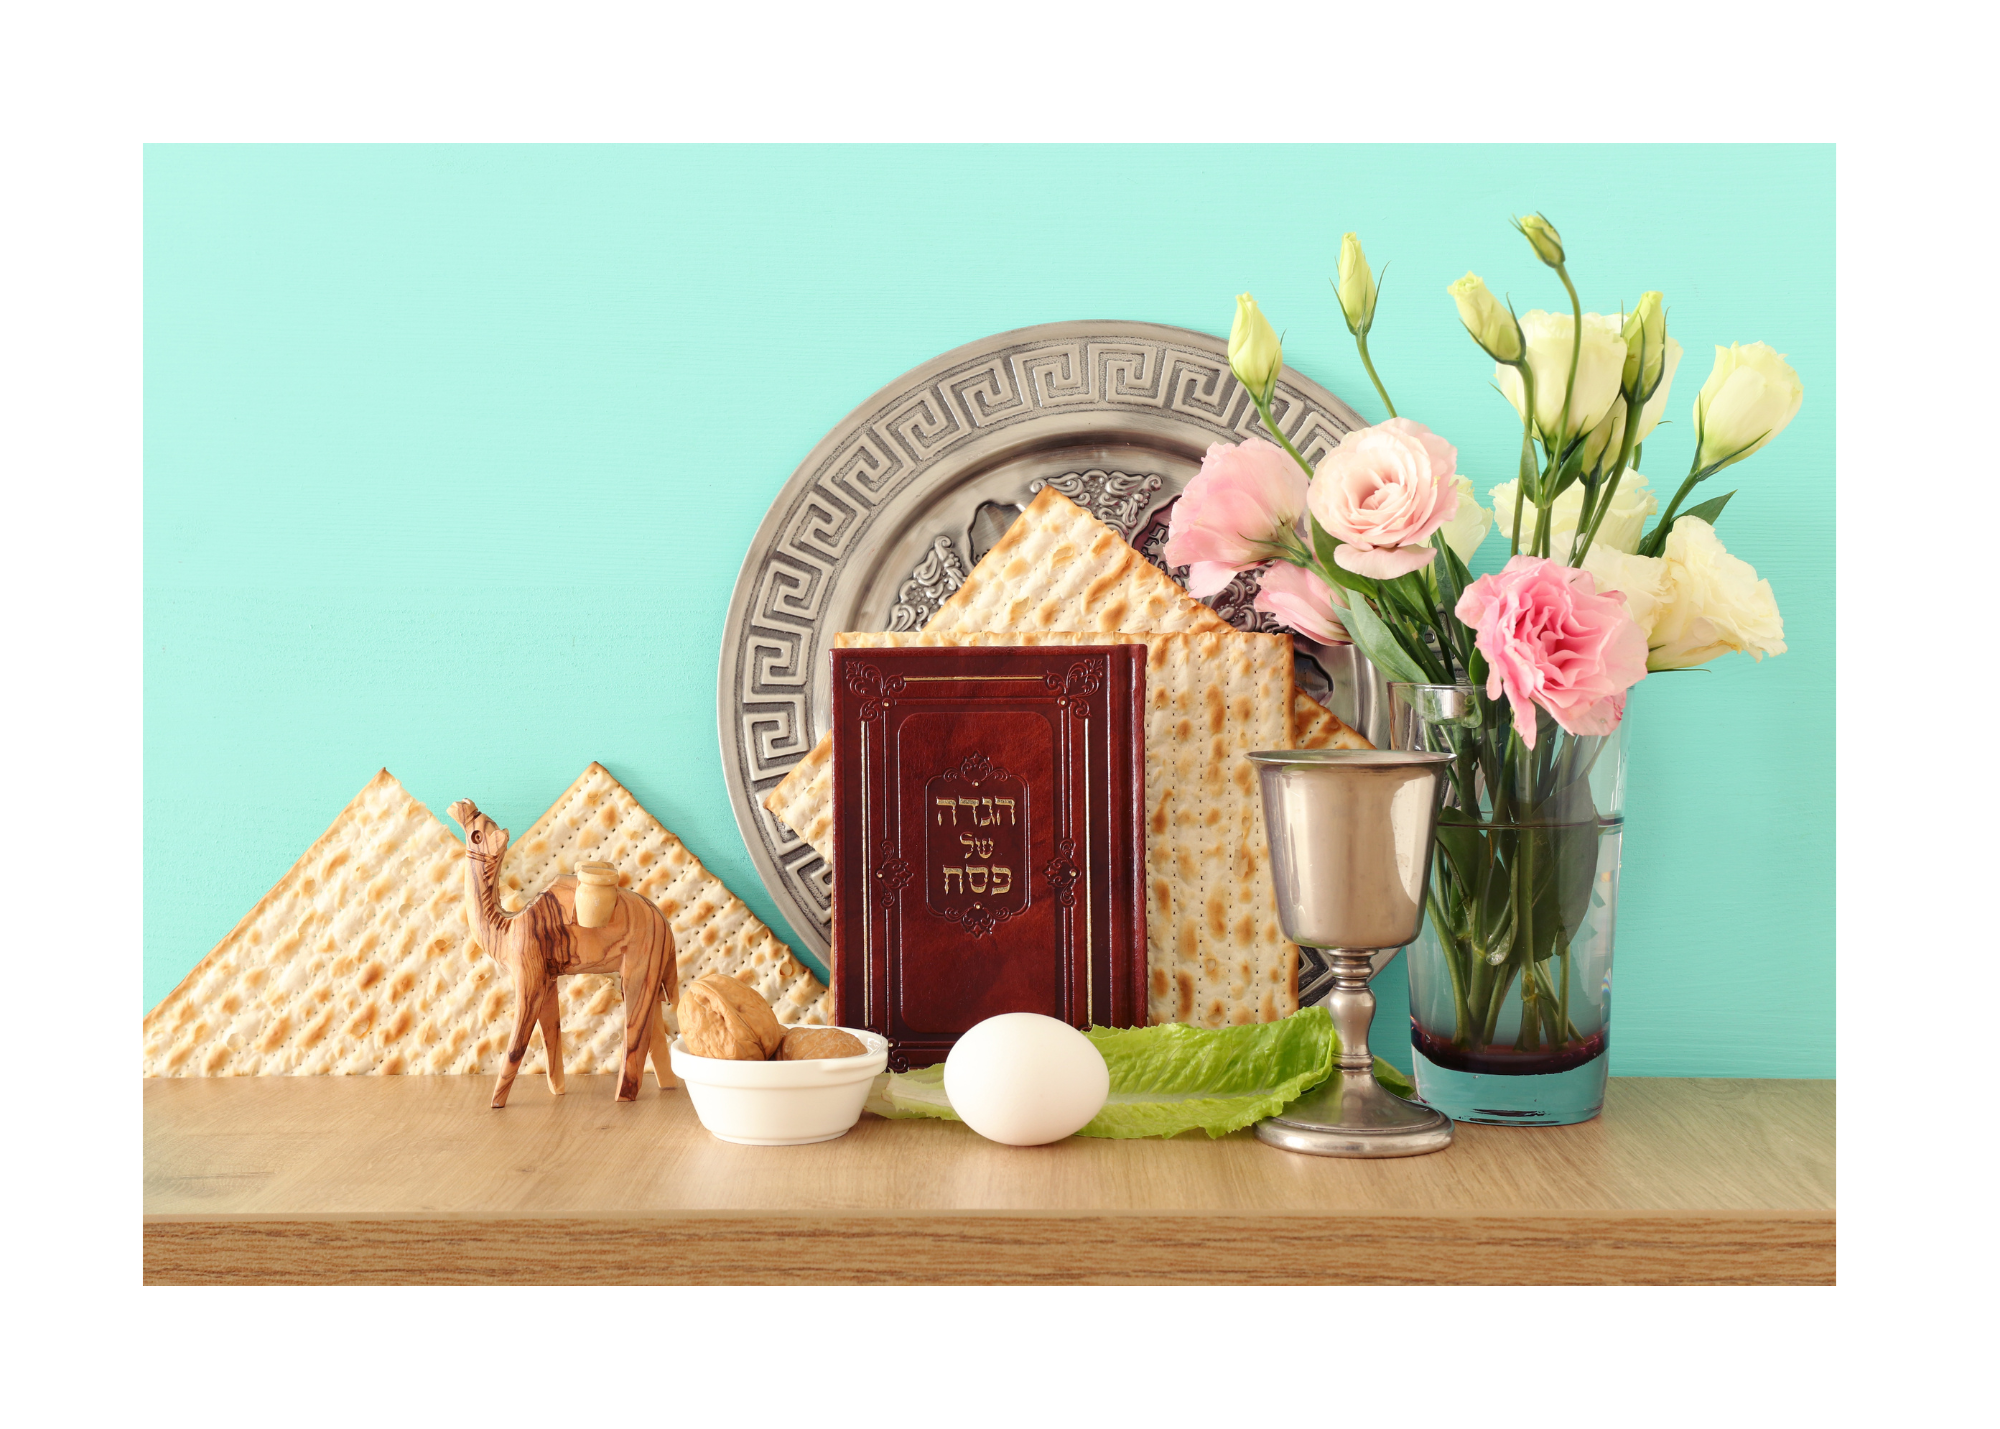 Passover photo with flowers, matzah, seder plate, etc. 